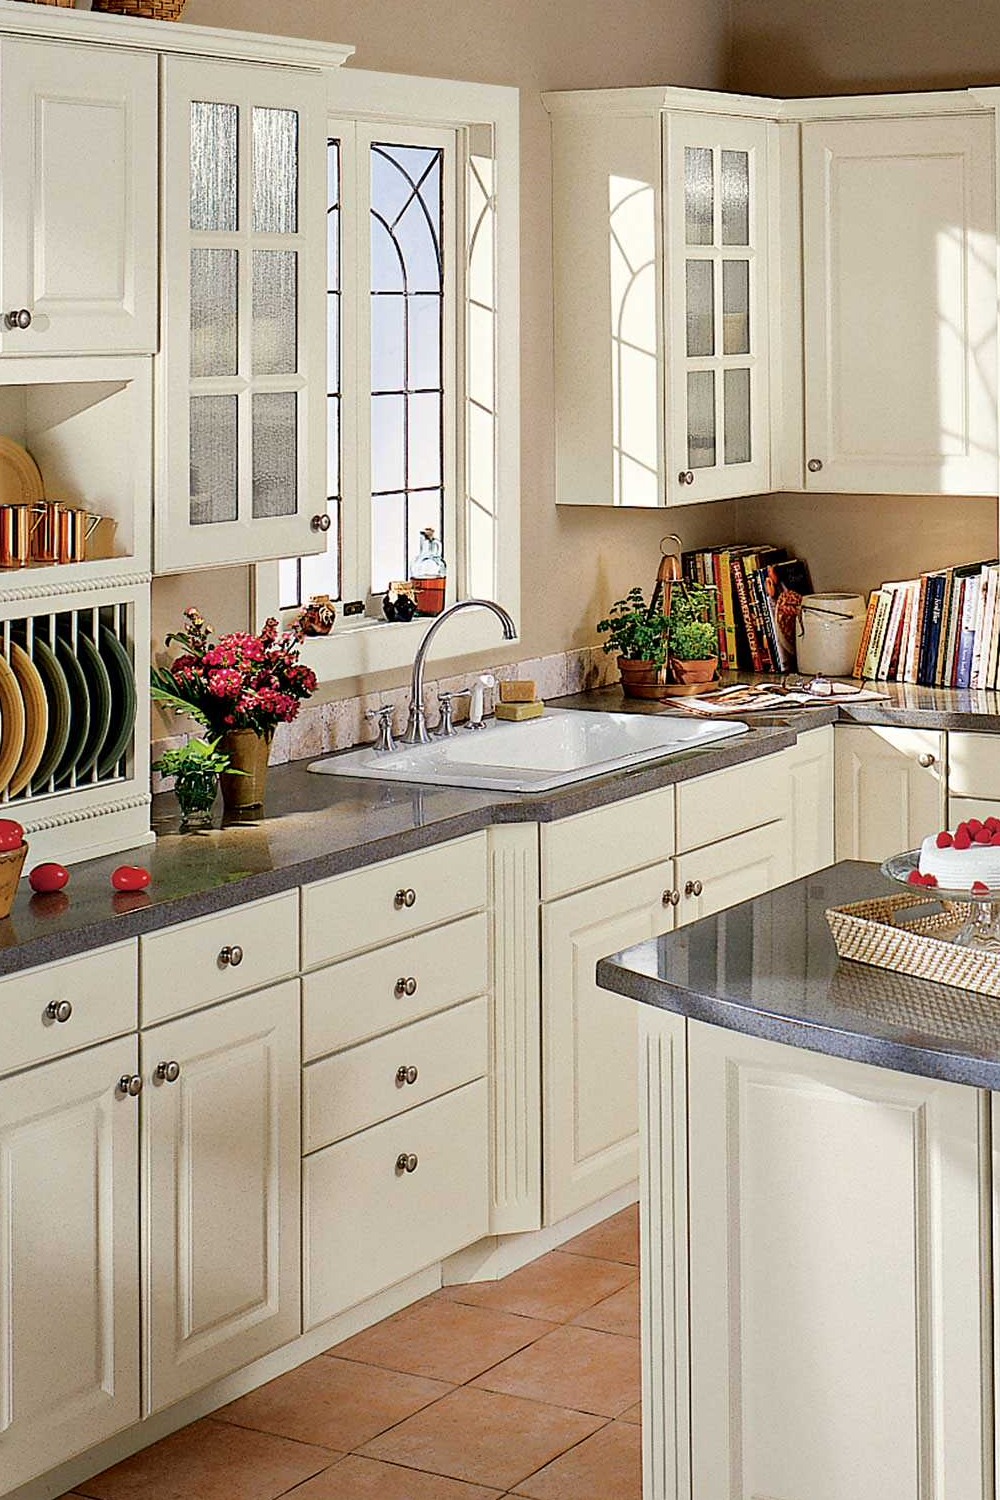 Gray Kitchen Granite Countertops Cream Cabinets Wall Paint Reddish Porcelain Floor Tile